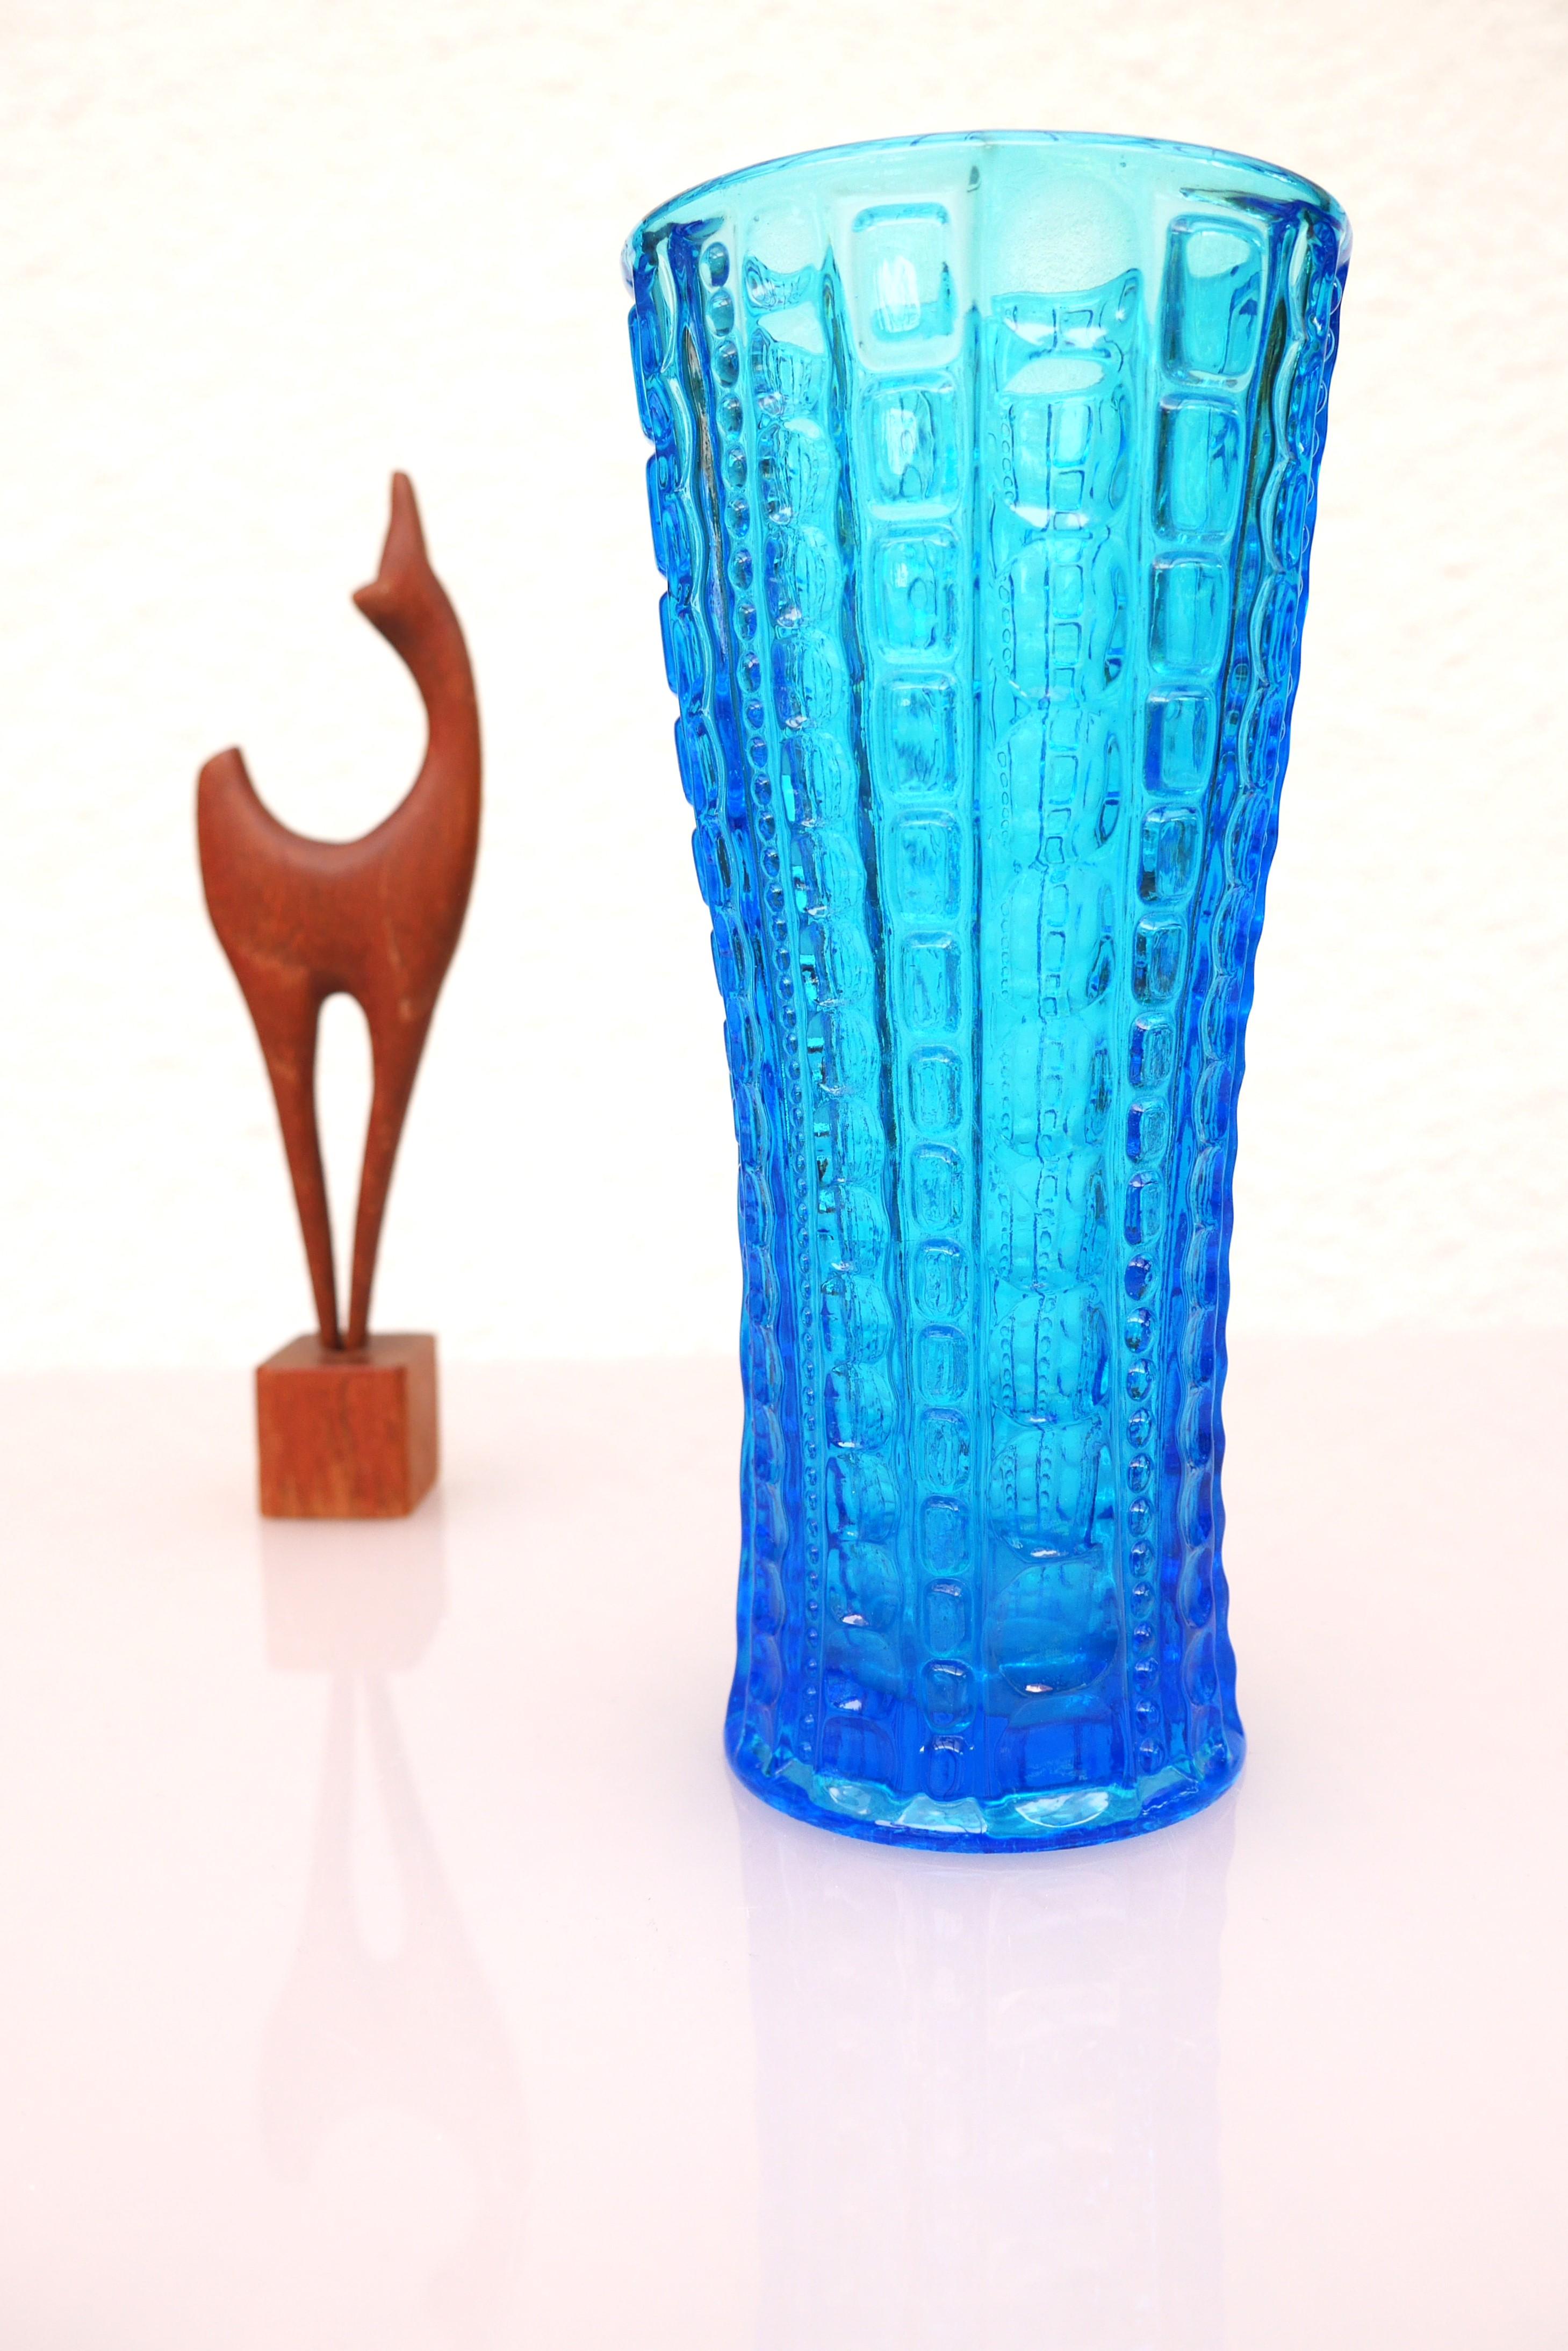 Czech Mid-century modern glass vase by Jan Sylwester Drost for Ząbkowice, Poland.